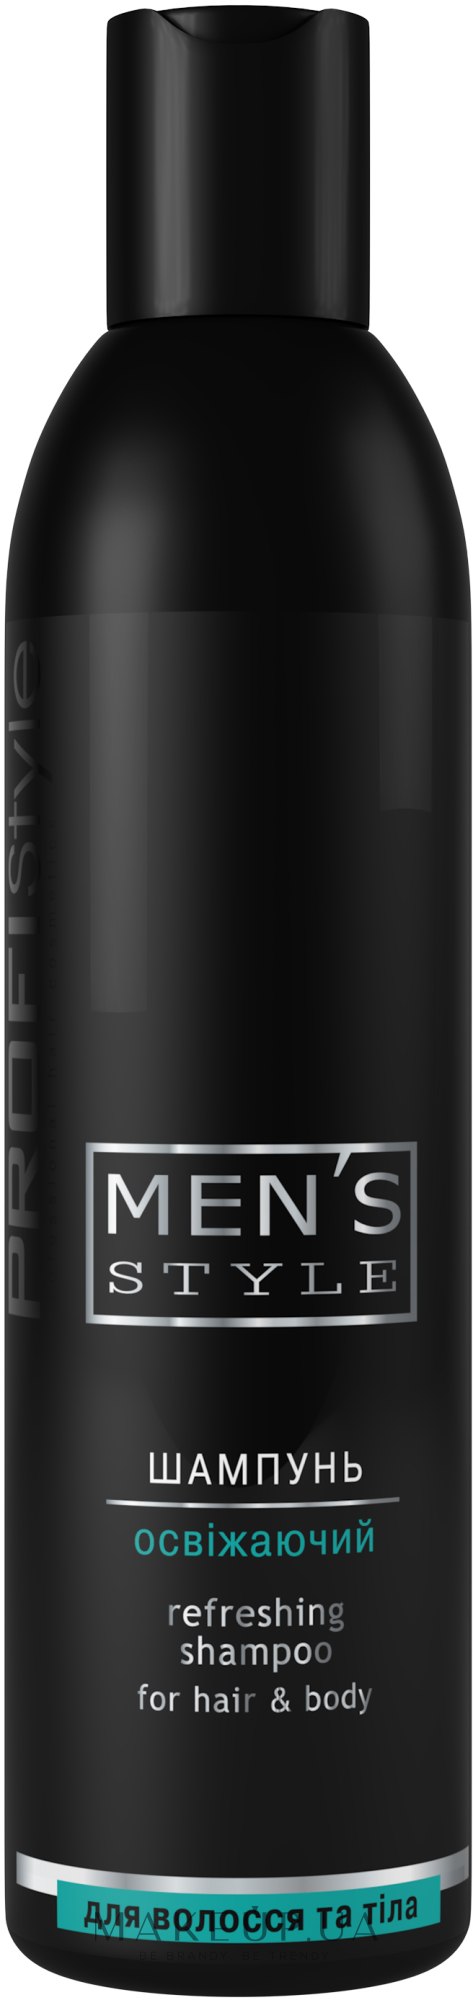 Шампунь освежающий для мужчин - Profi Style Men's Style Refreshing Shampoo  — фото 250ml